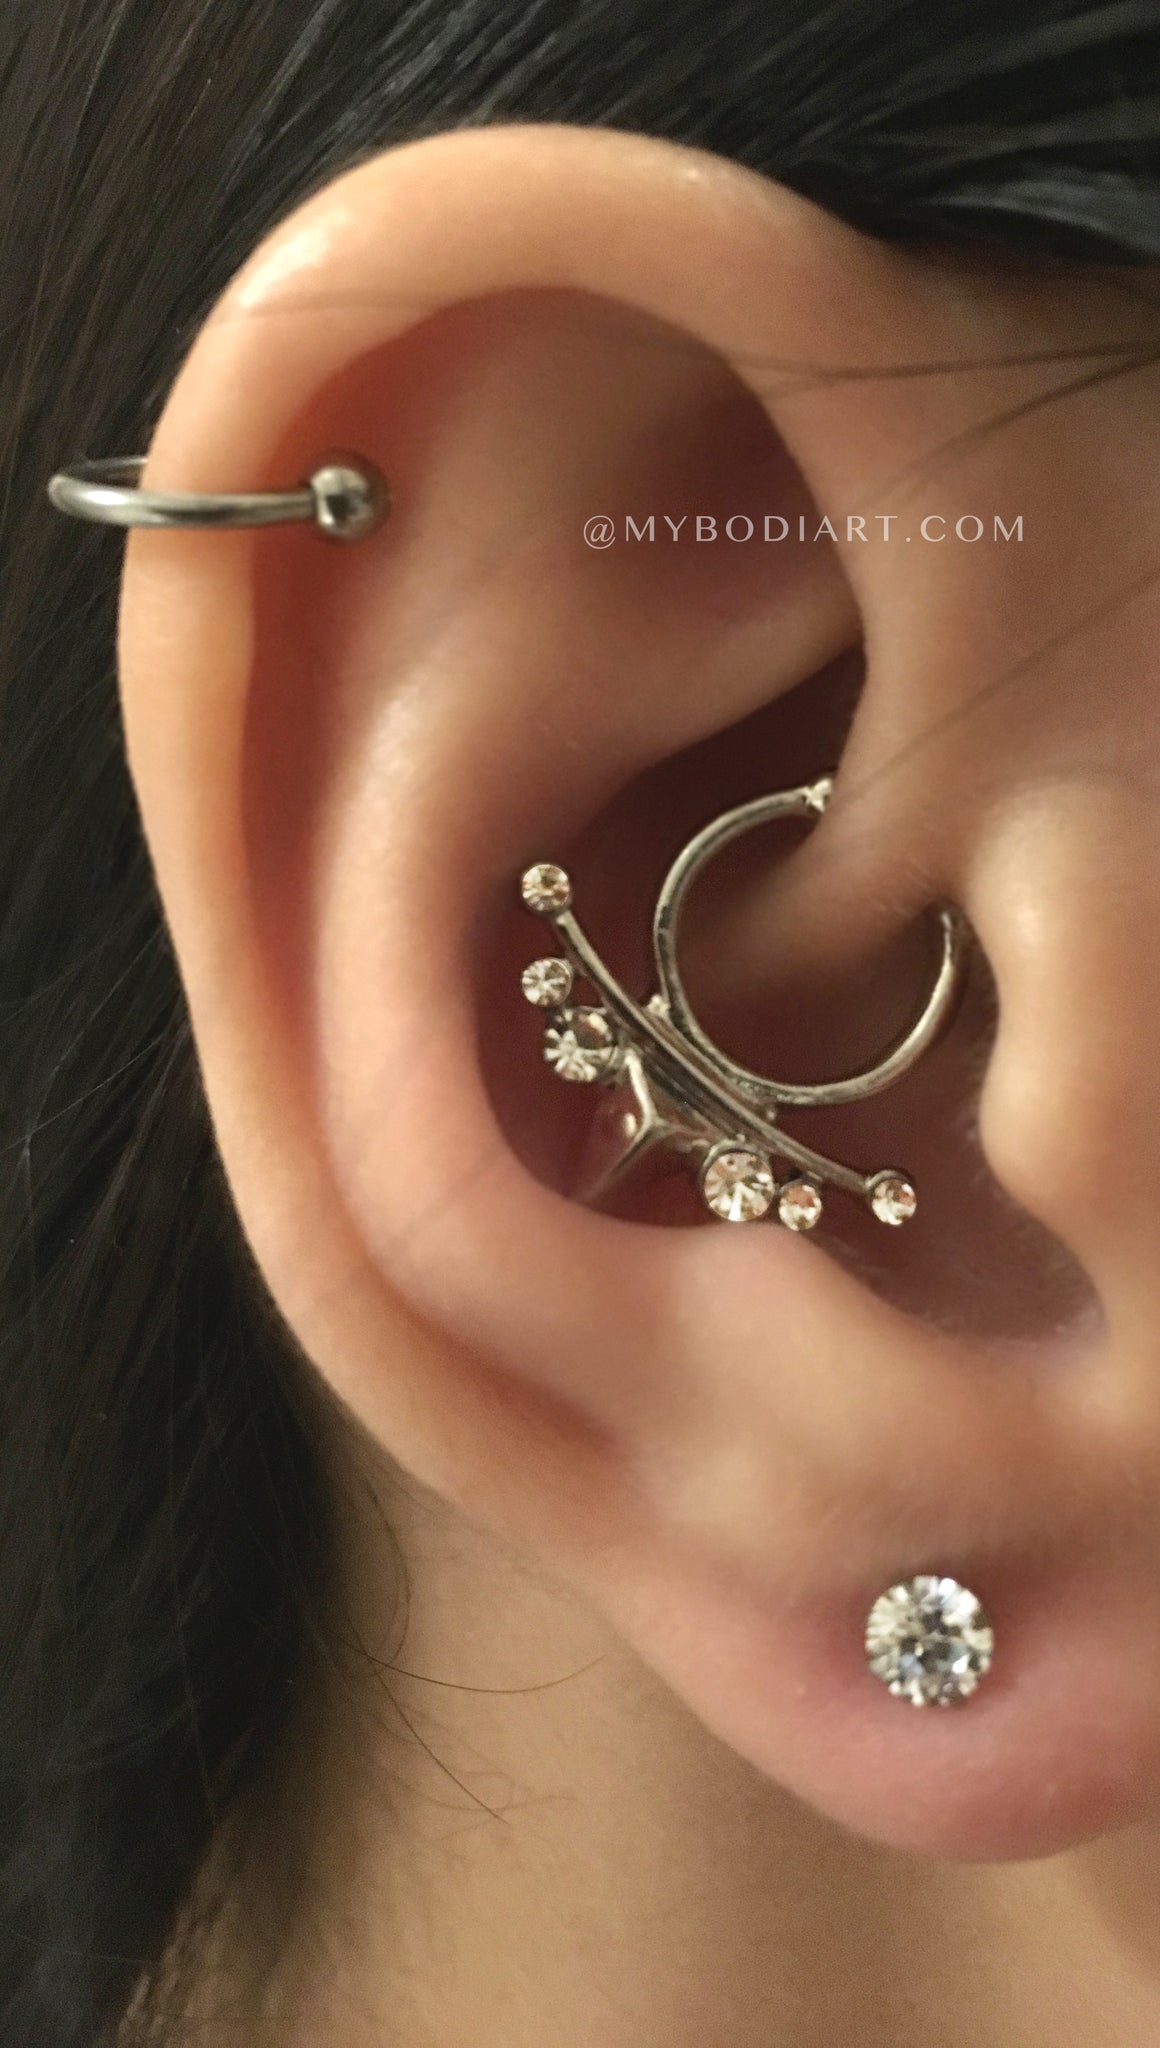 Classy Creative Ear Piercing Ideas Single Cartilage Top Ear Ring Hoop Daith Earring Crystal Ear Lobe Studs - www.MyBodiArt.com